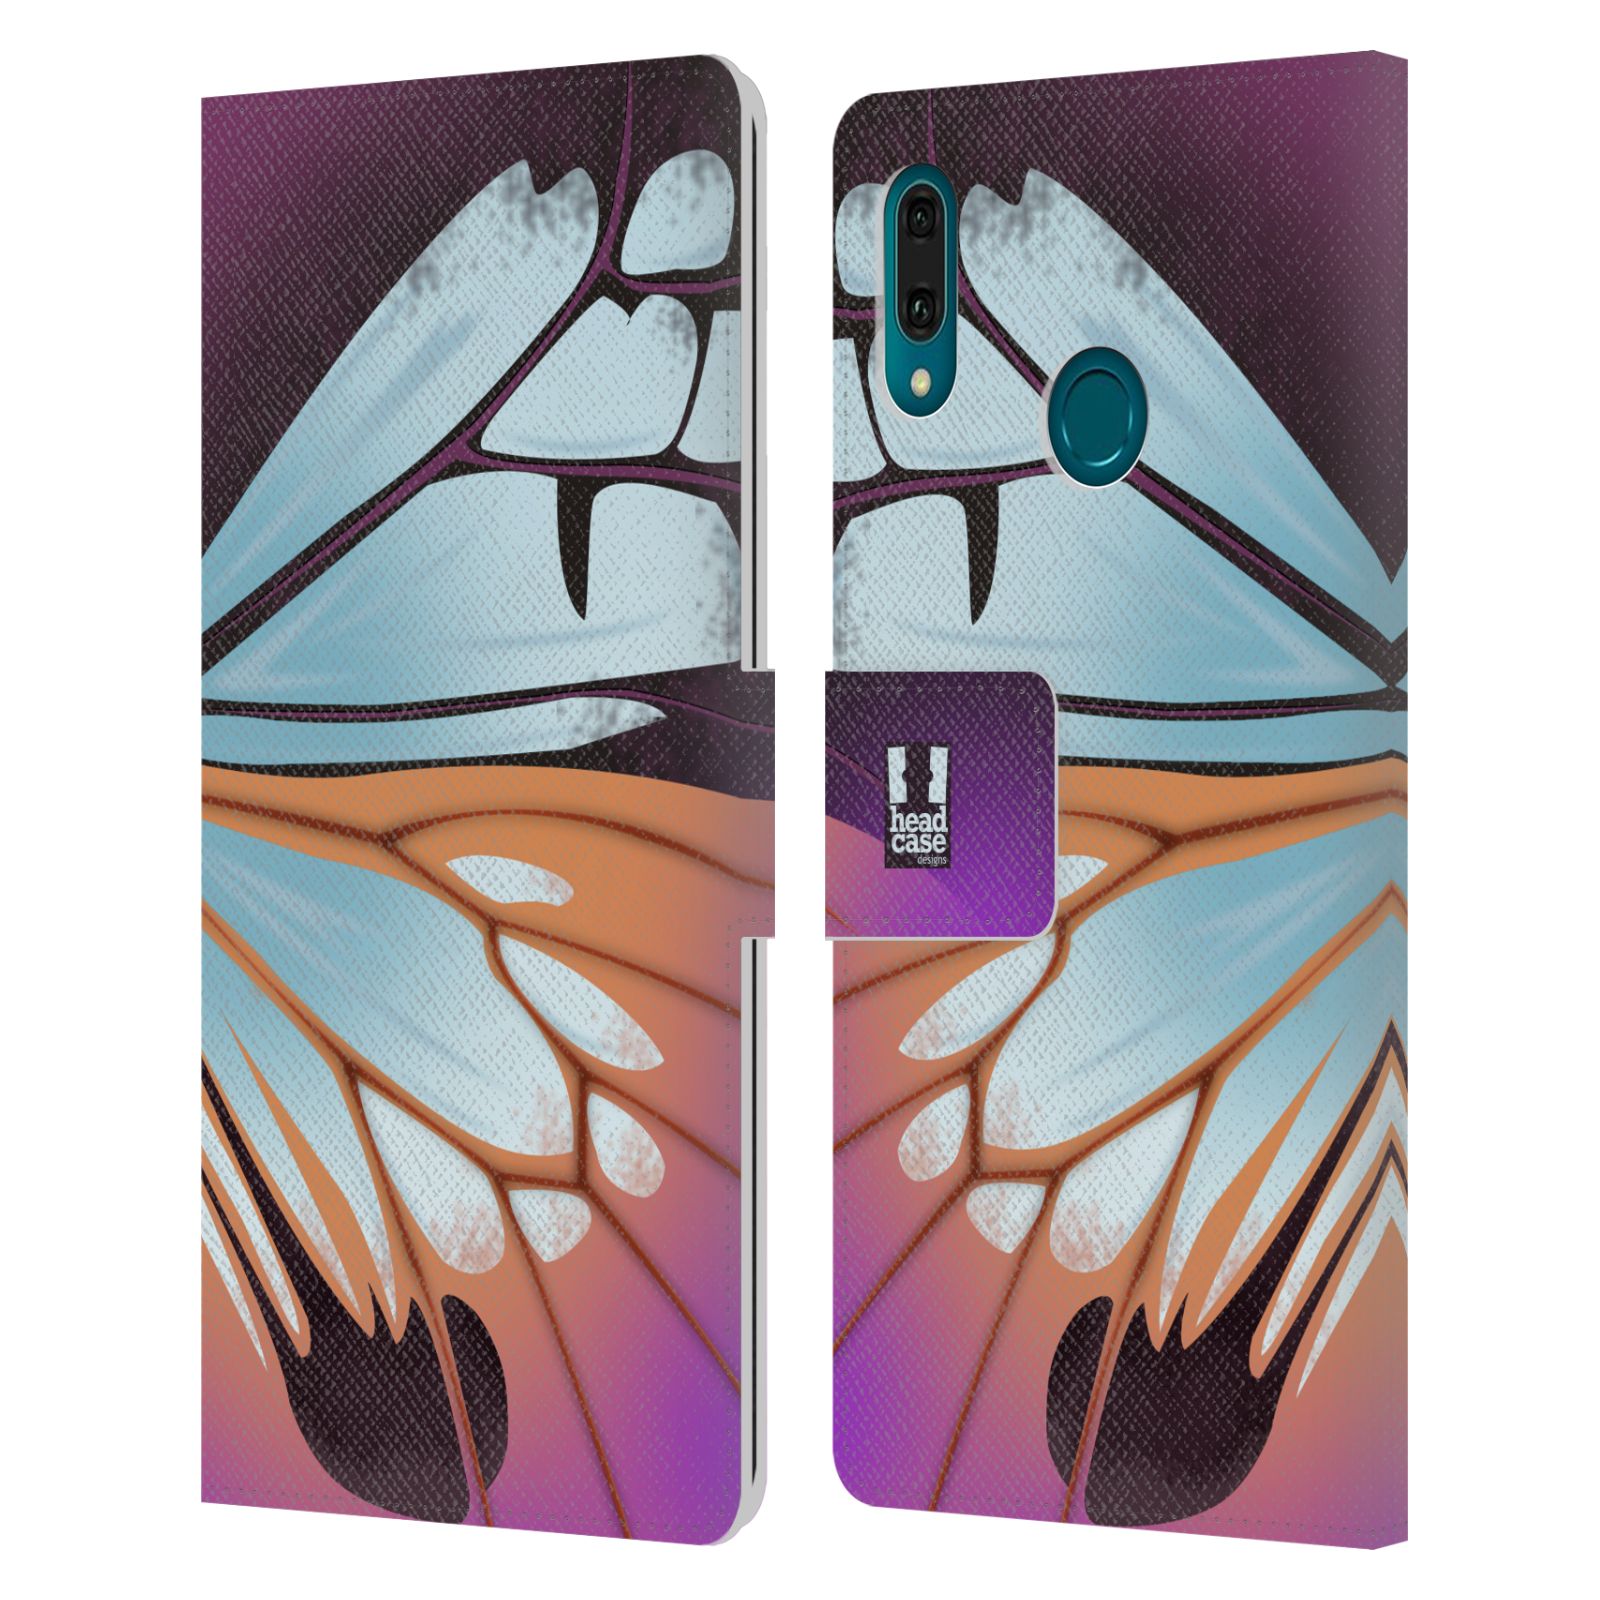 Pouzdro na mobil Huawei Y9 2019 motýl a křídla kreslený vzor fialová a modrá